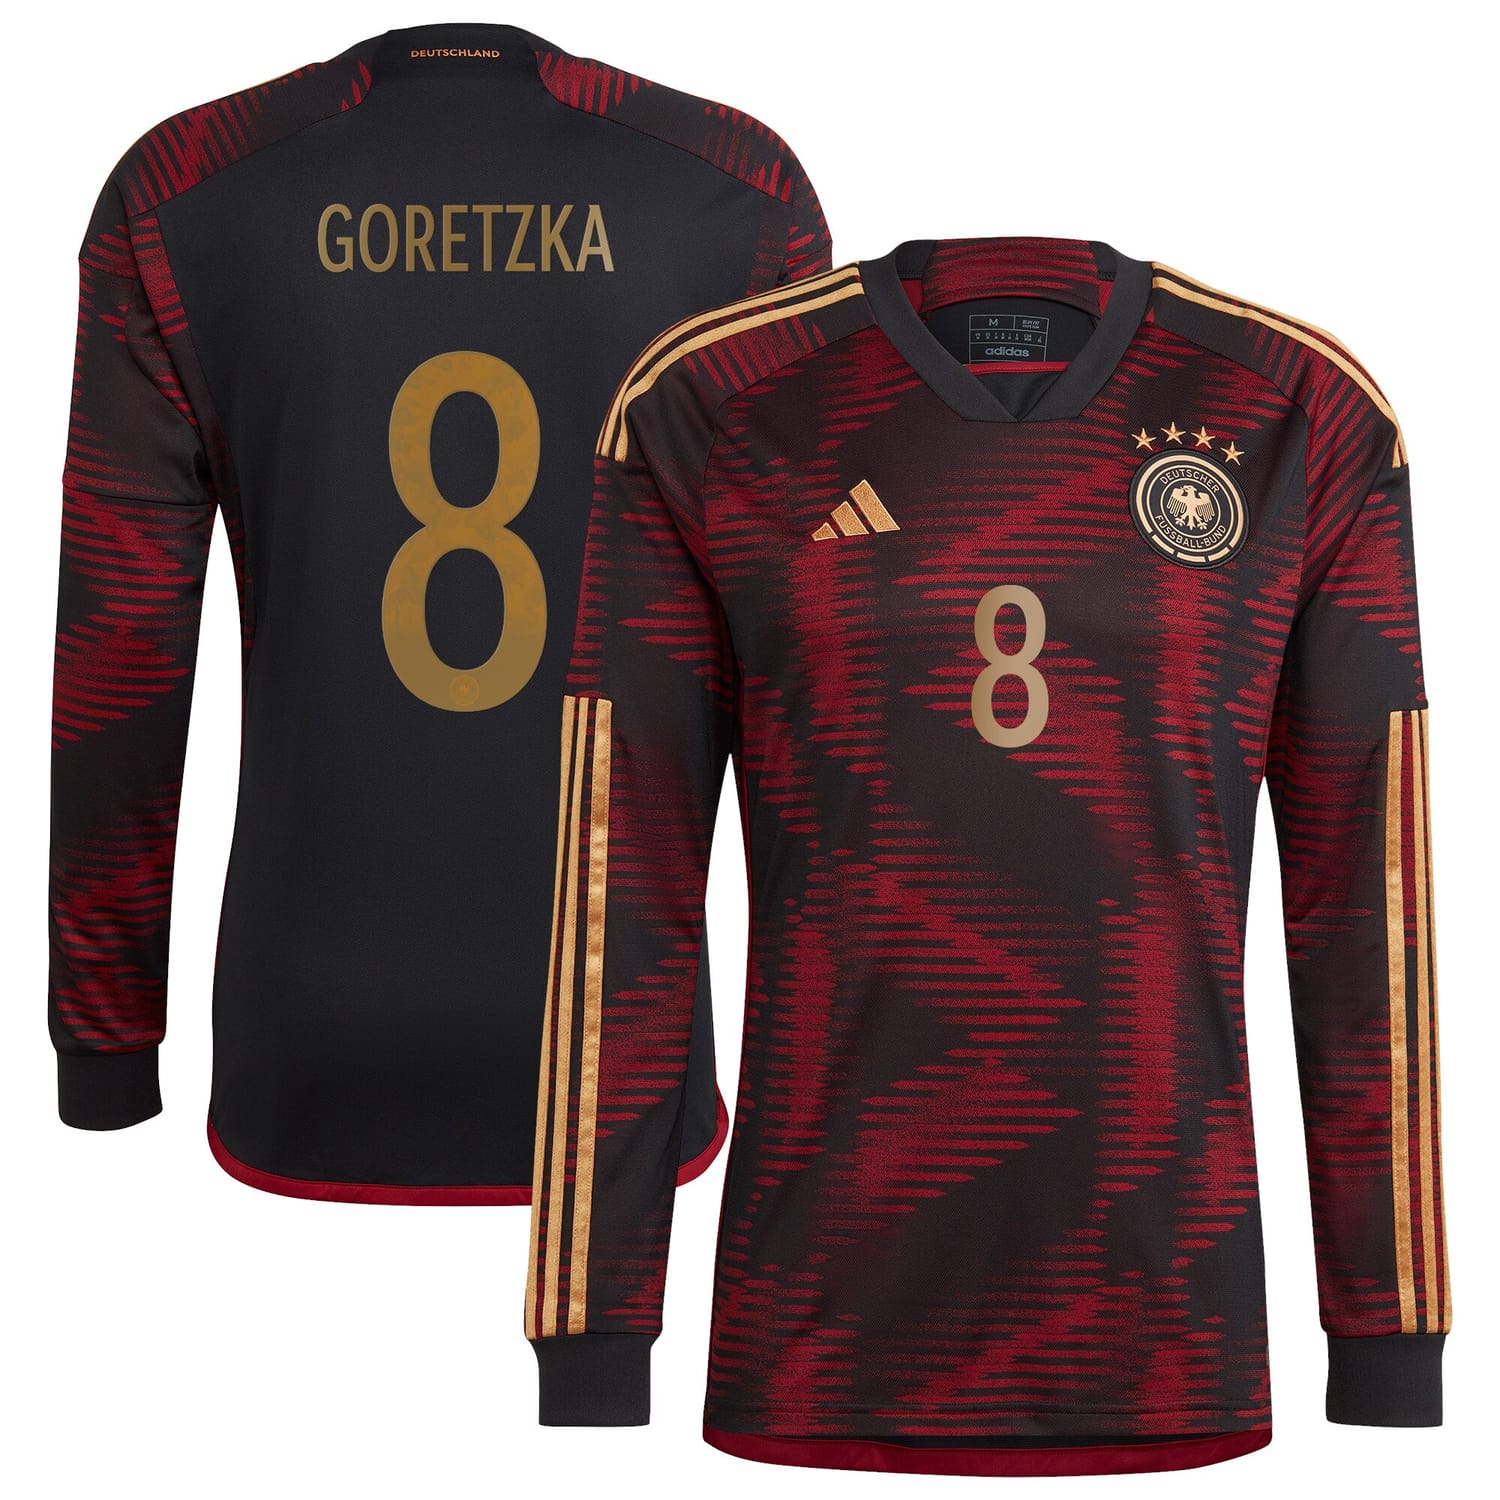 Germany National Team Away Jersey Shirt Long Sleeve player Leon Goretzka 8 printing for Men